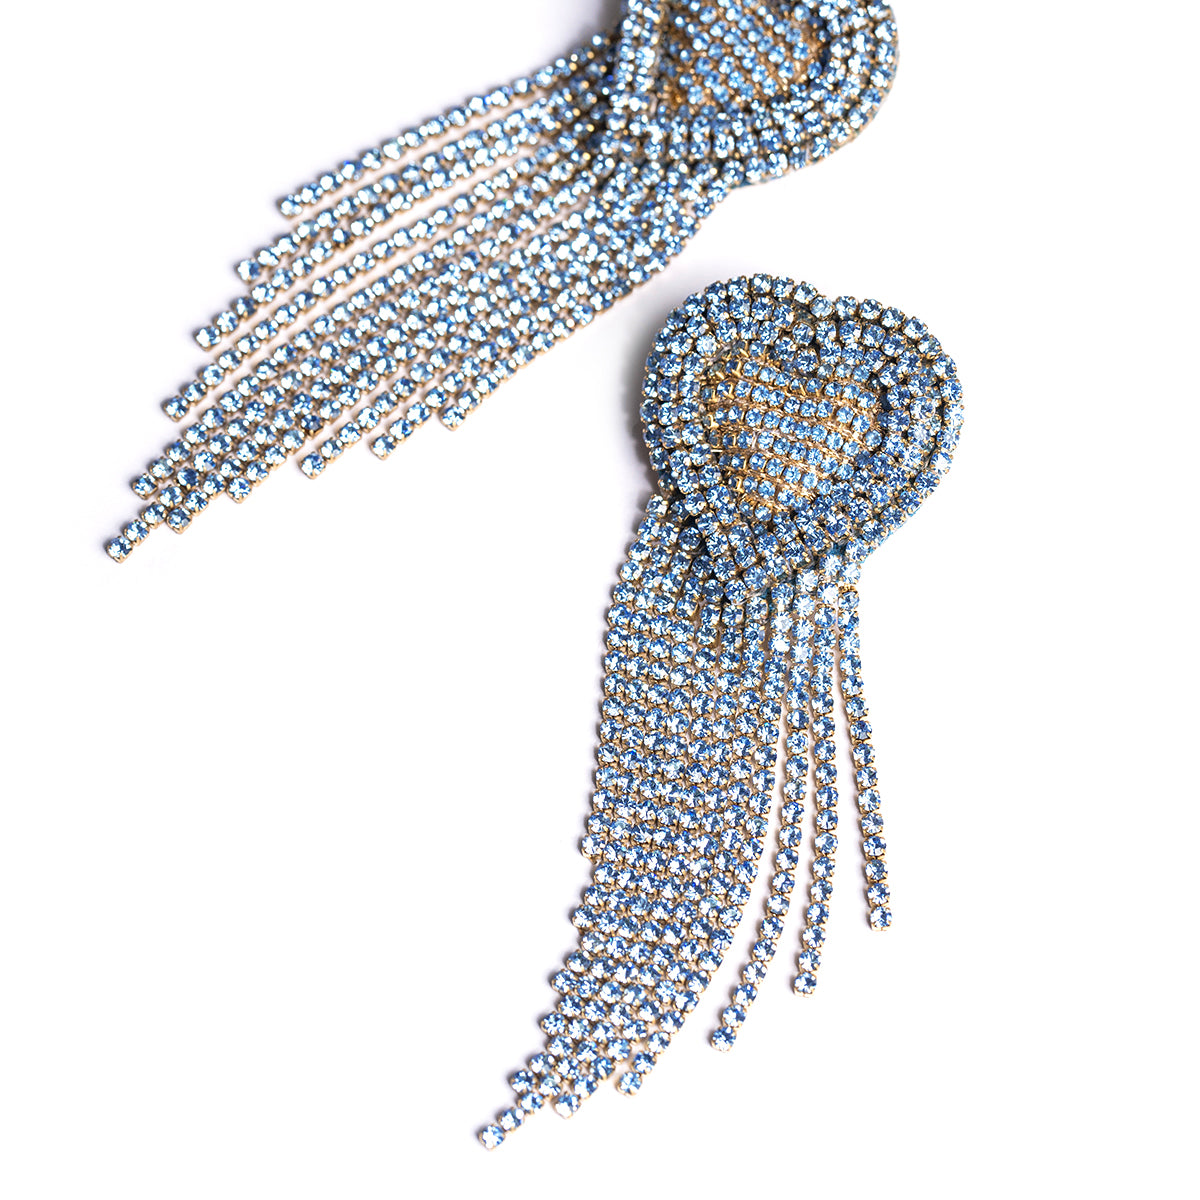 Deepa Gurnani handmade the Kaylie earrings in blue color